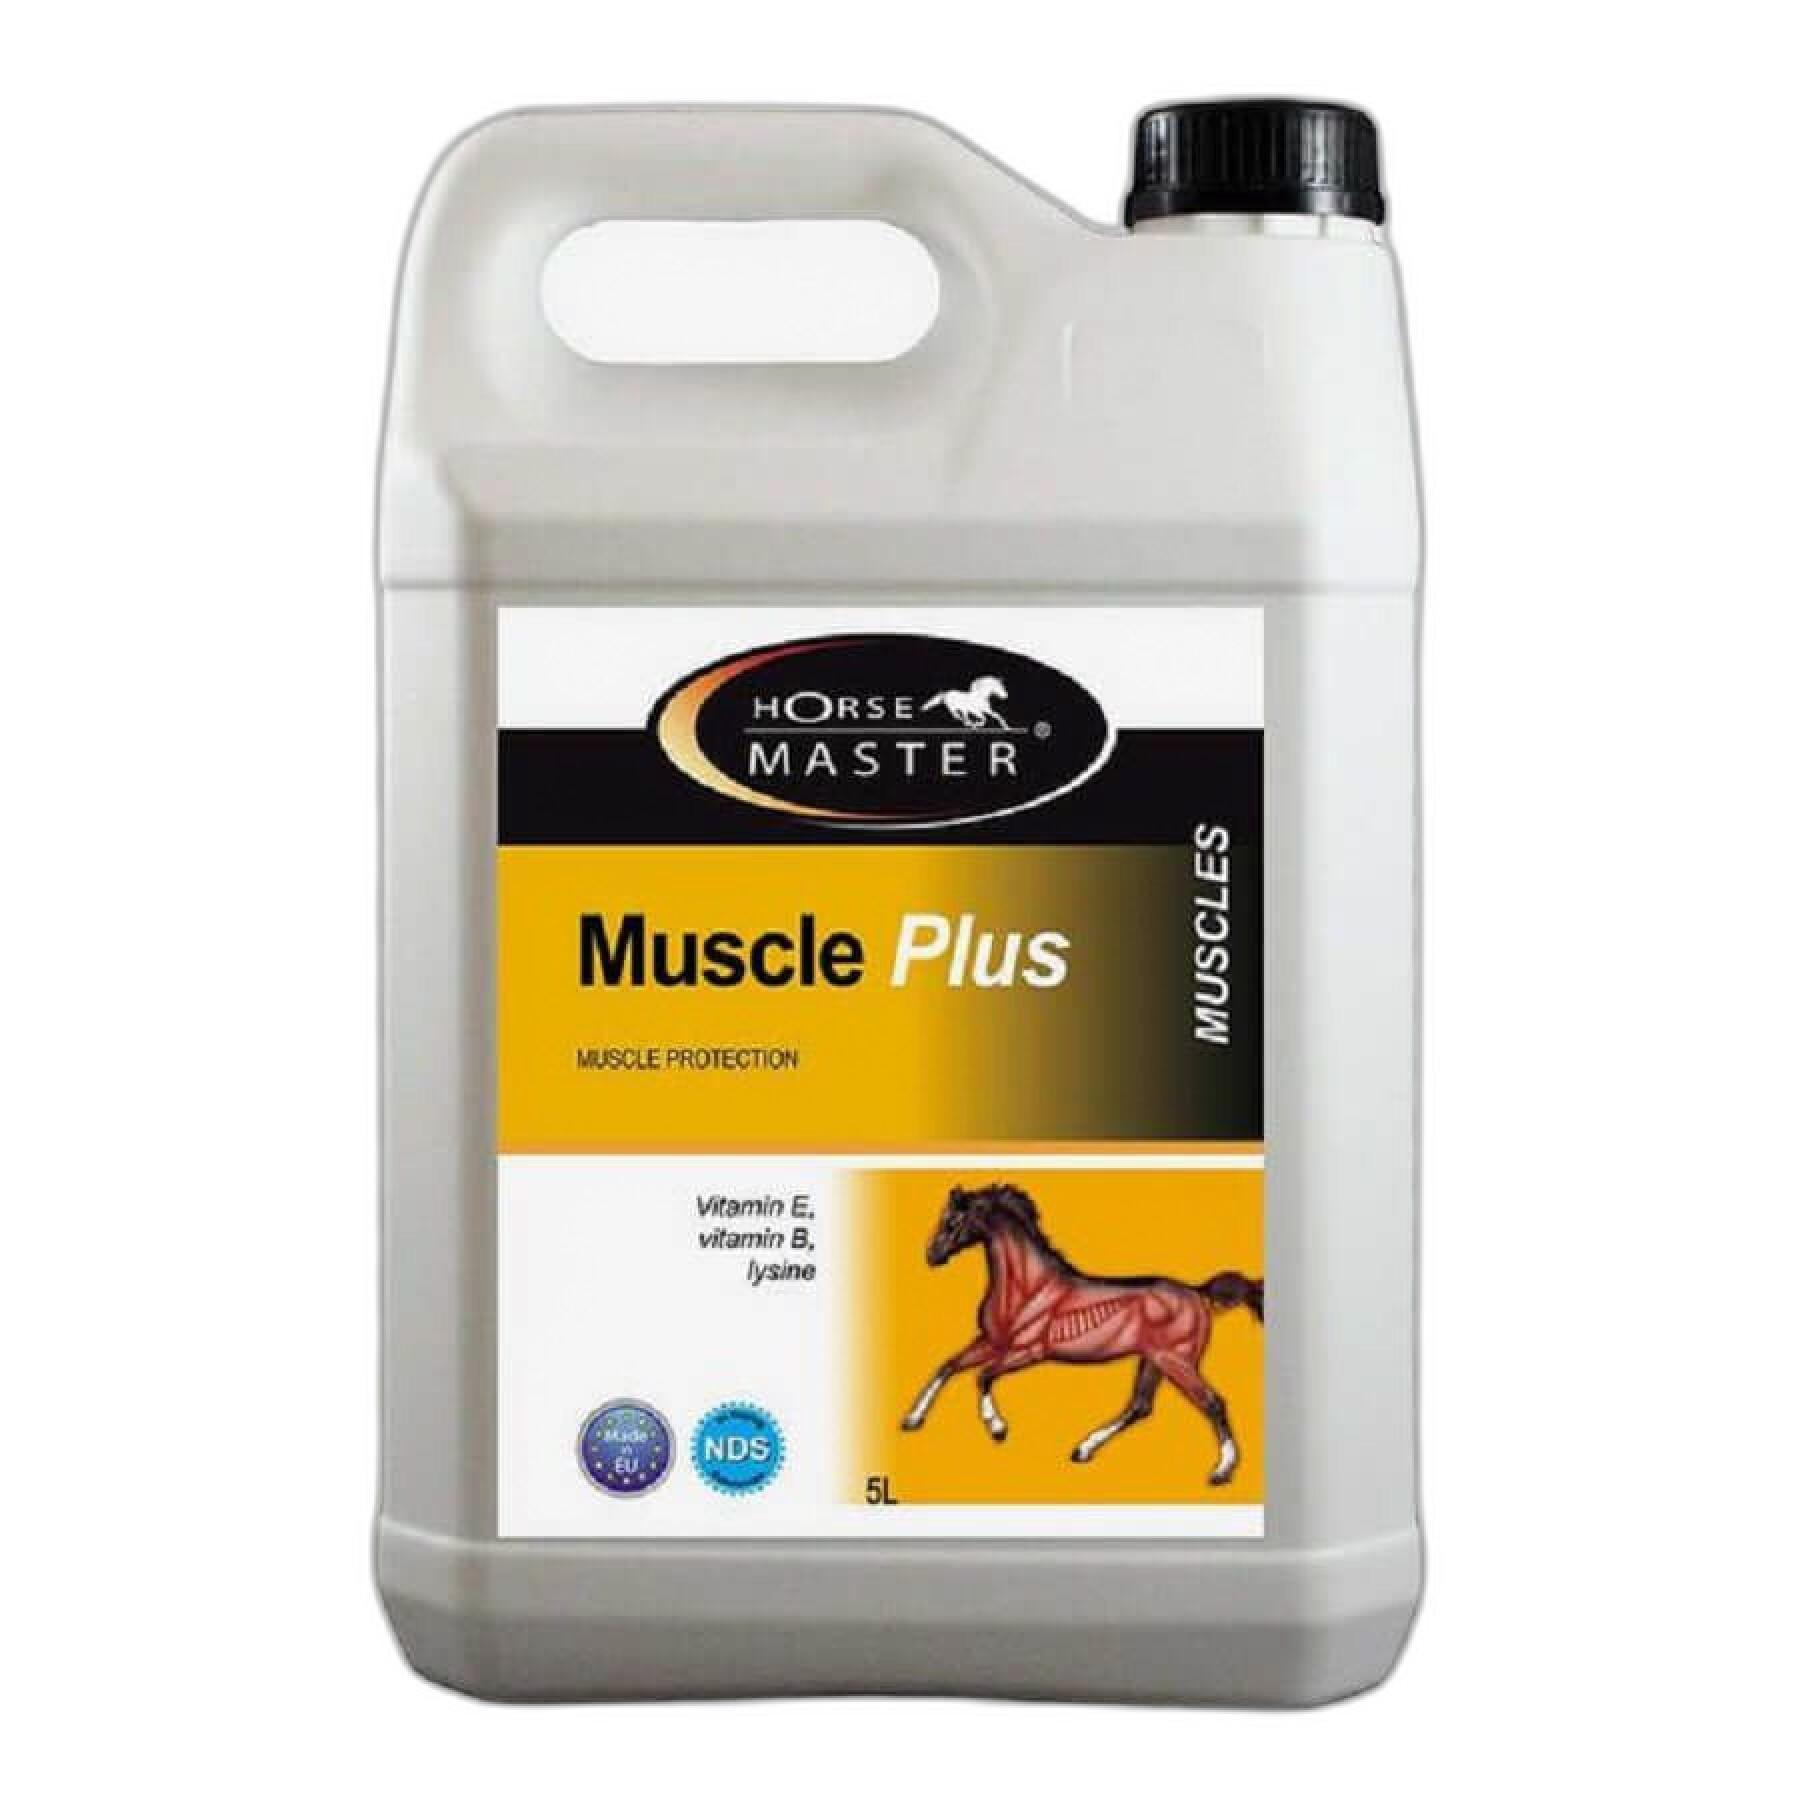 Suplemento de apoio às articulações do cavalo - lata Horse Master Muscle Plus